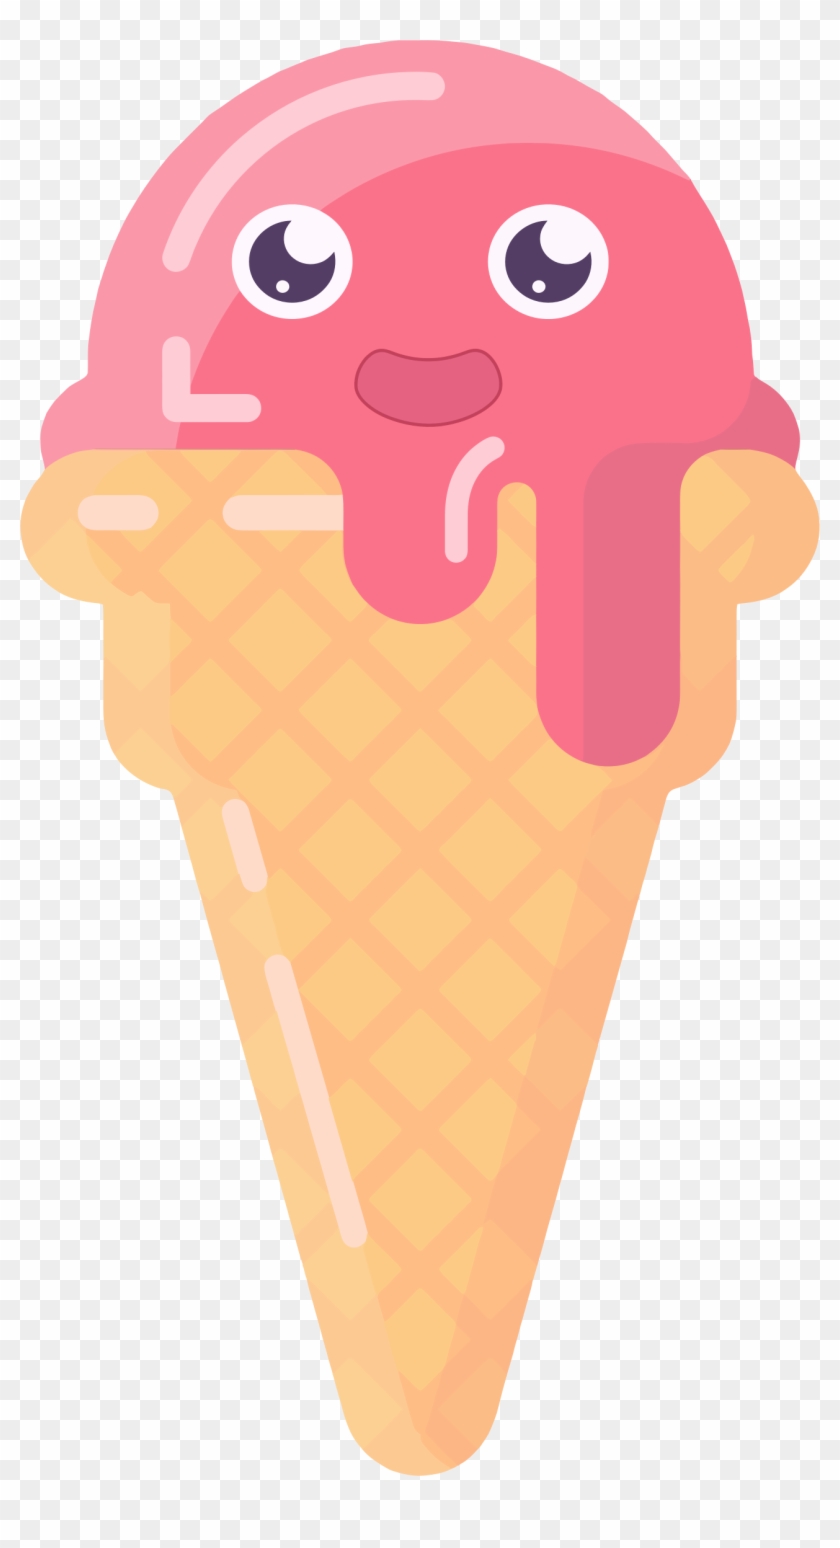 Big Image - Ice Cream Cone Clipart #172702